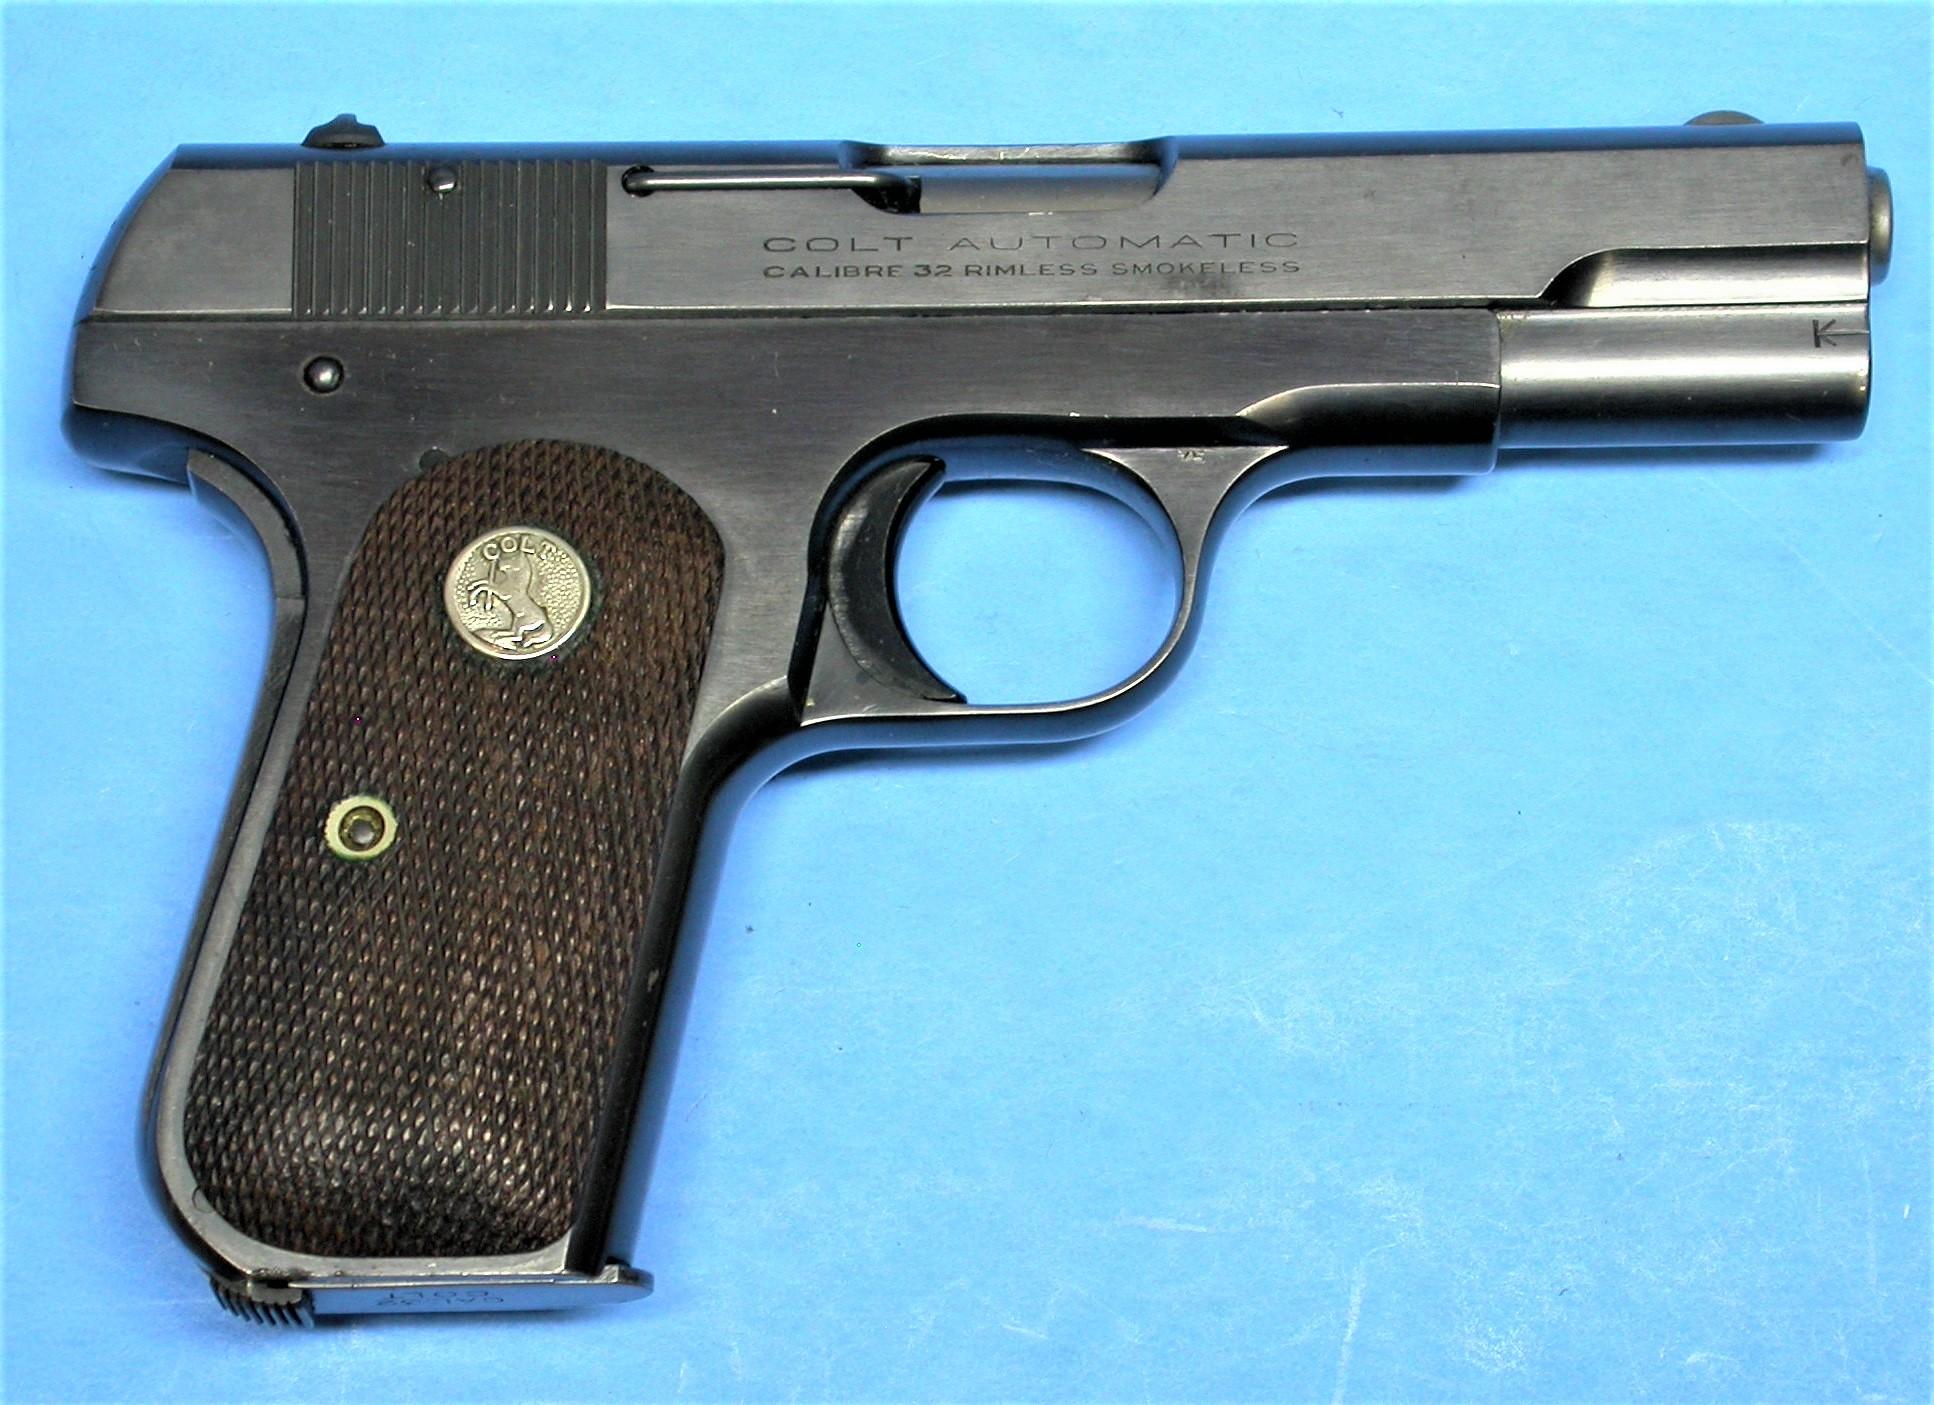 COLT MODEL 1903 Semiautomatic 32 ACP Pistol With Box FFL: 523702 (BA1)